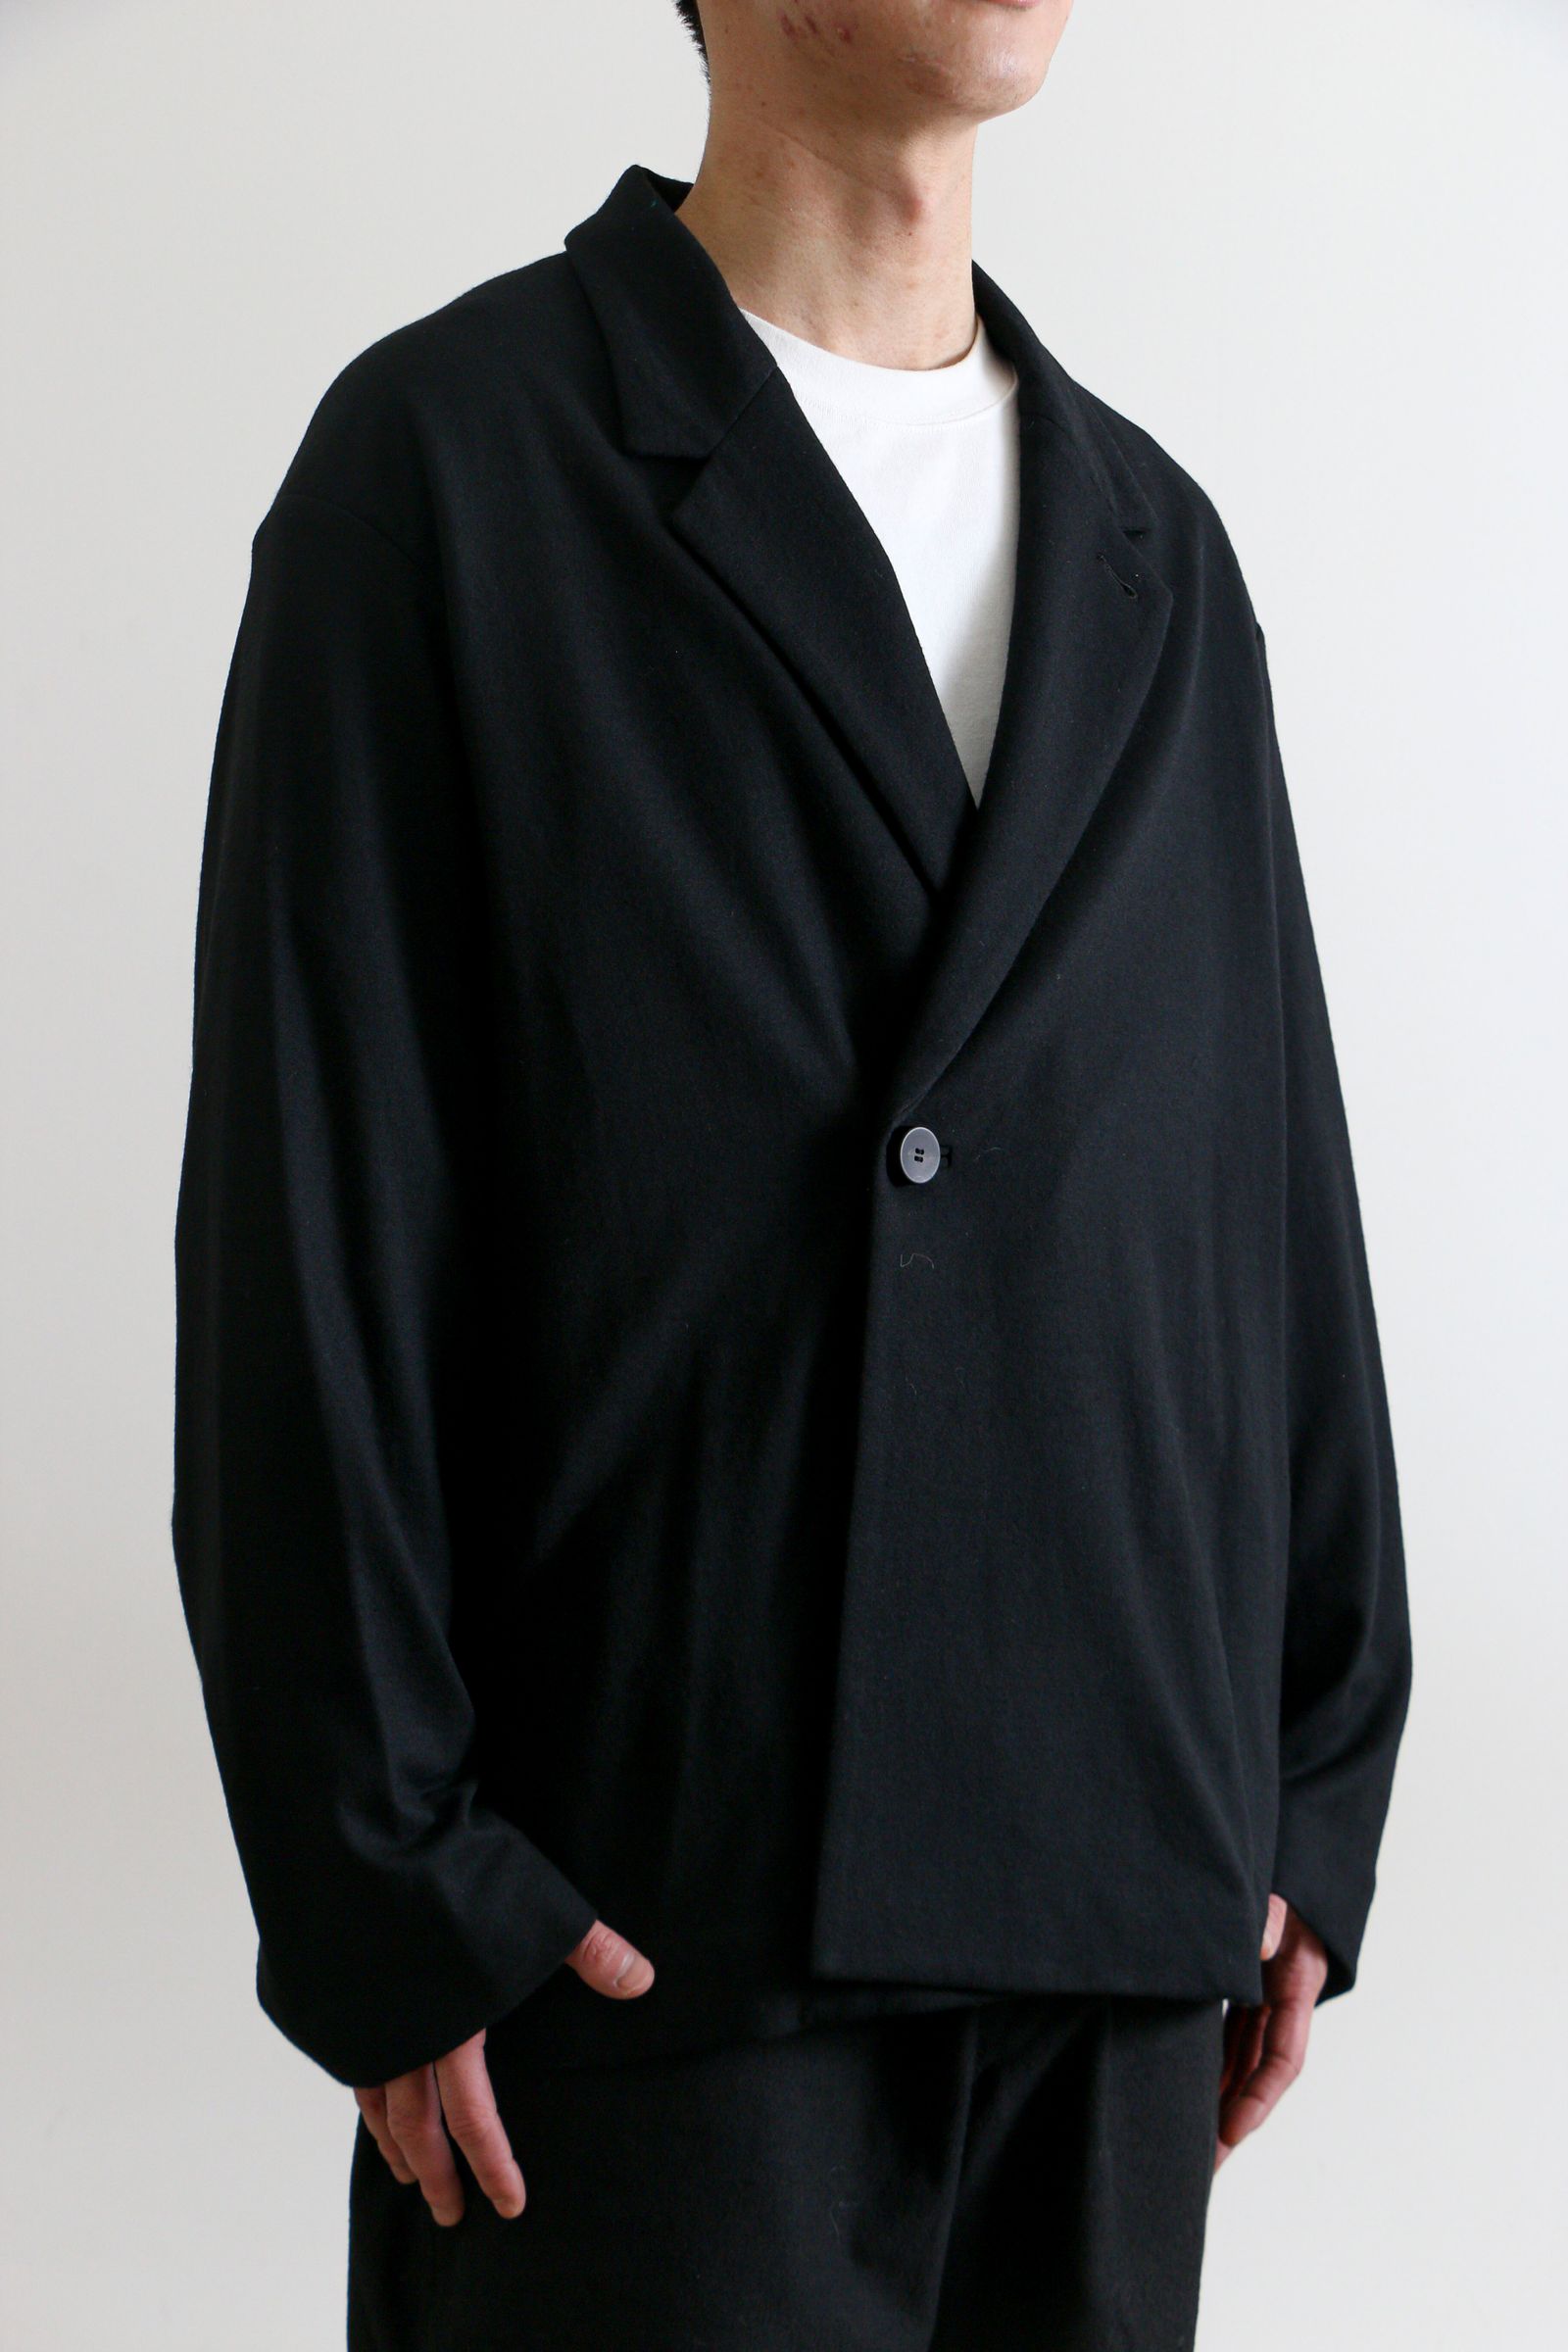 KANEMASA PHIL. - High Gauge Milled Wool Double Jacket BLACK